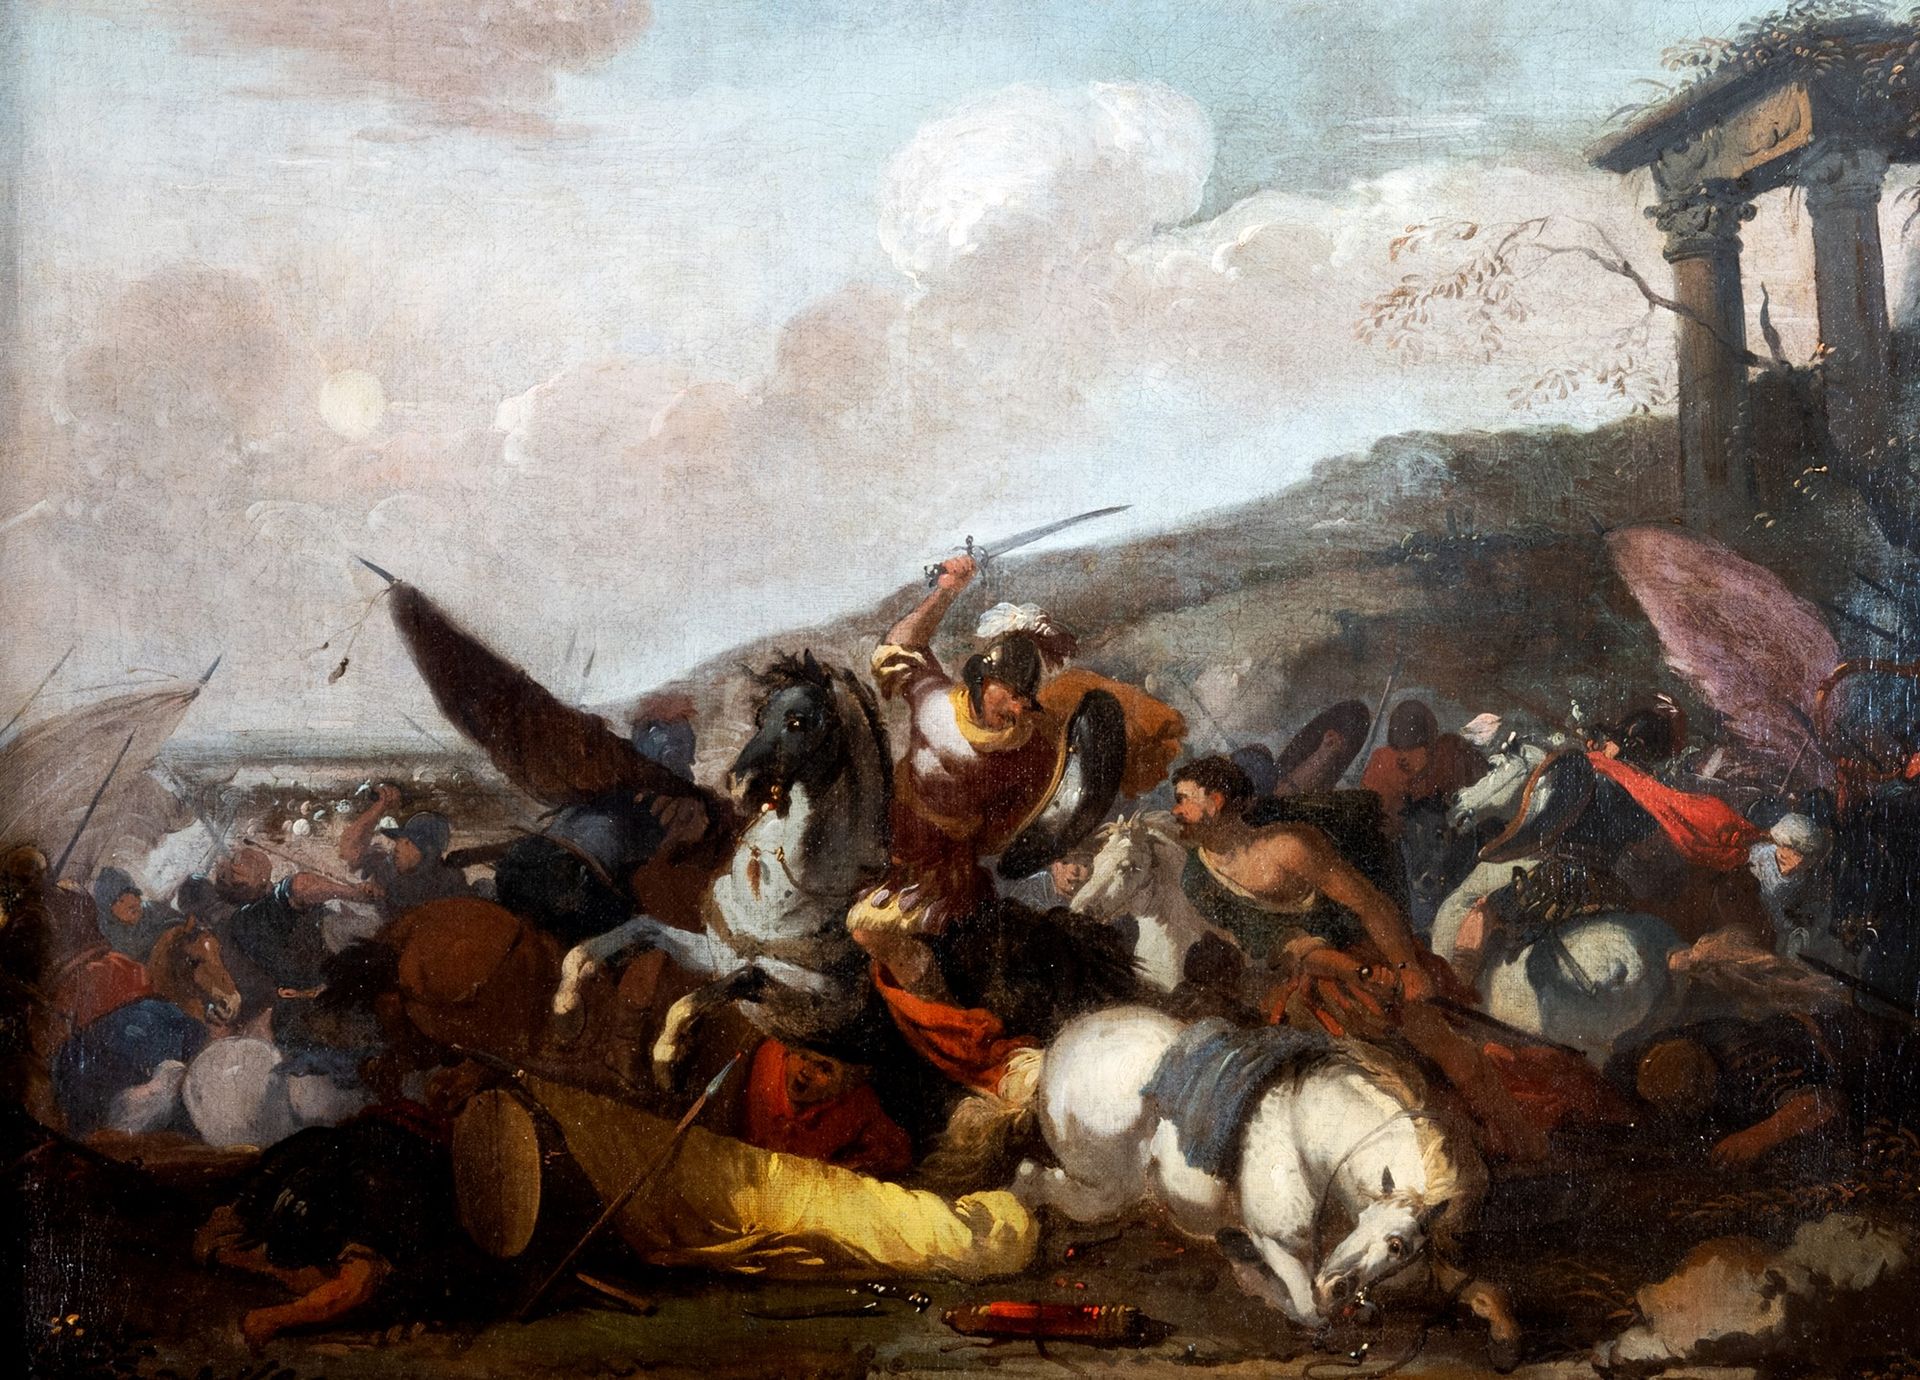 Scuola italiana, secolo XVII Escena de batalla

óleo sobre lienzo
47,5 x 64,5 cm